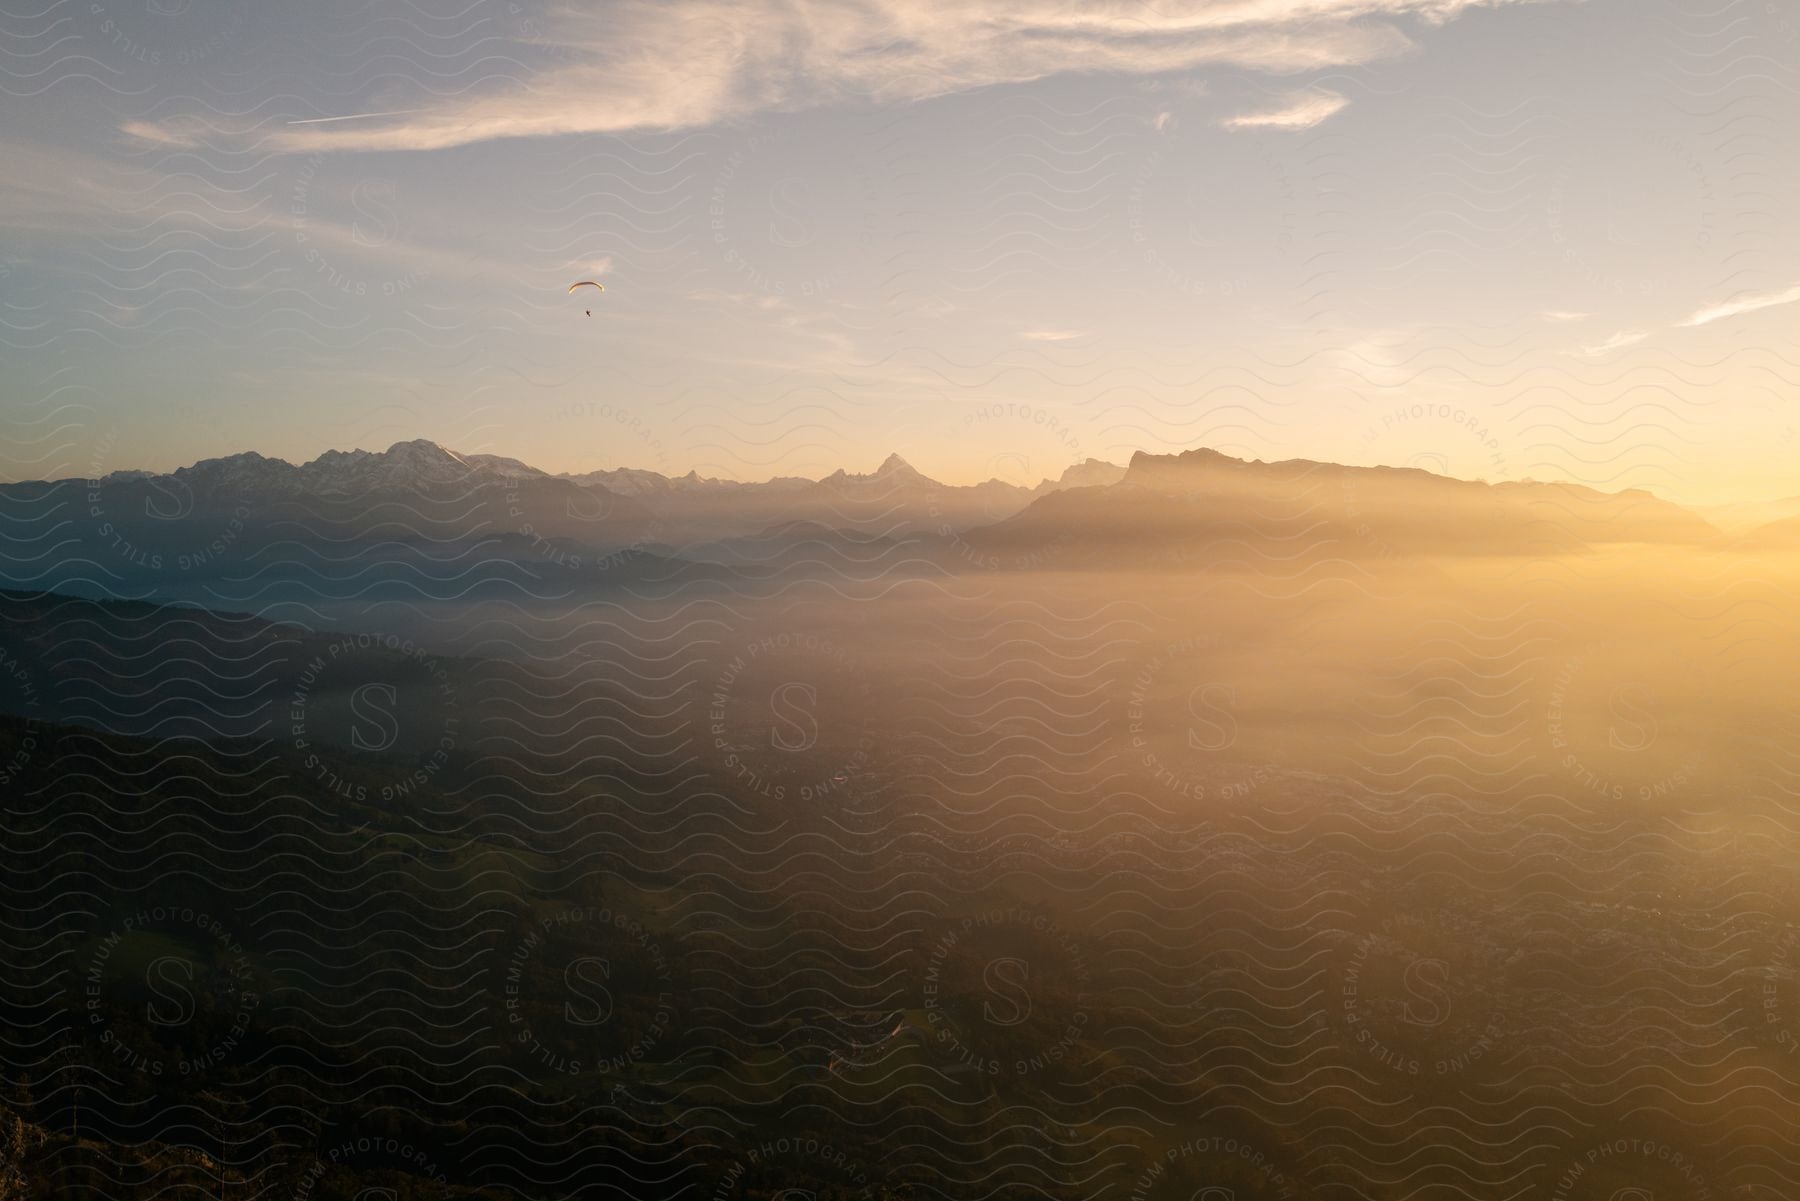 Mountains spread across the horizon under a hazy sky as a paraglider floats across the sky